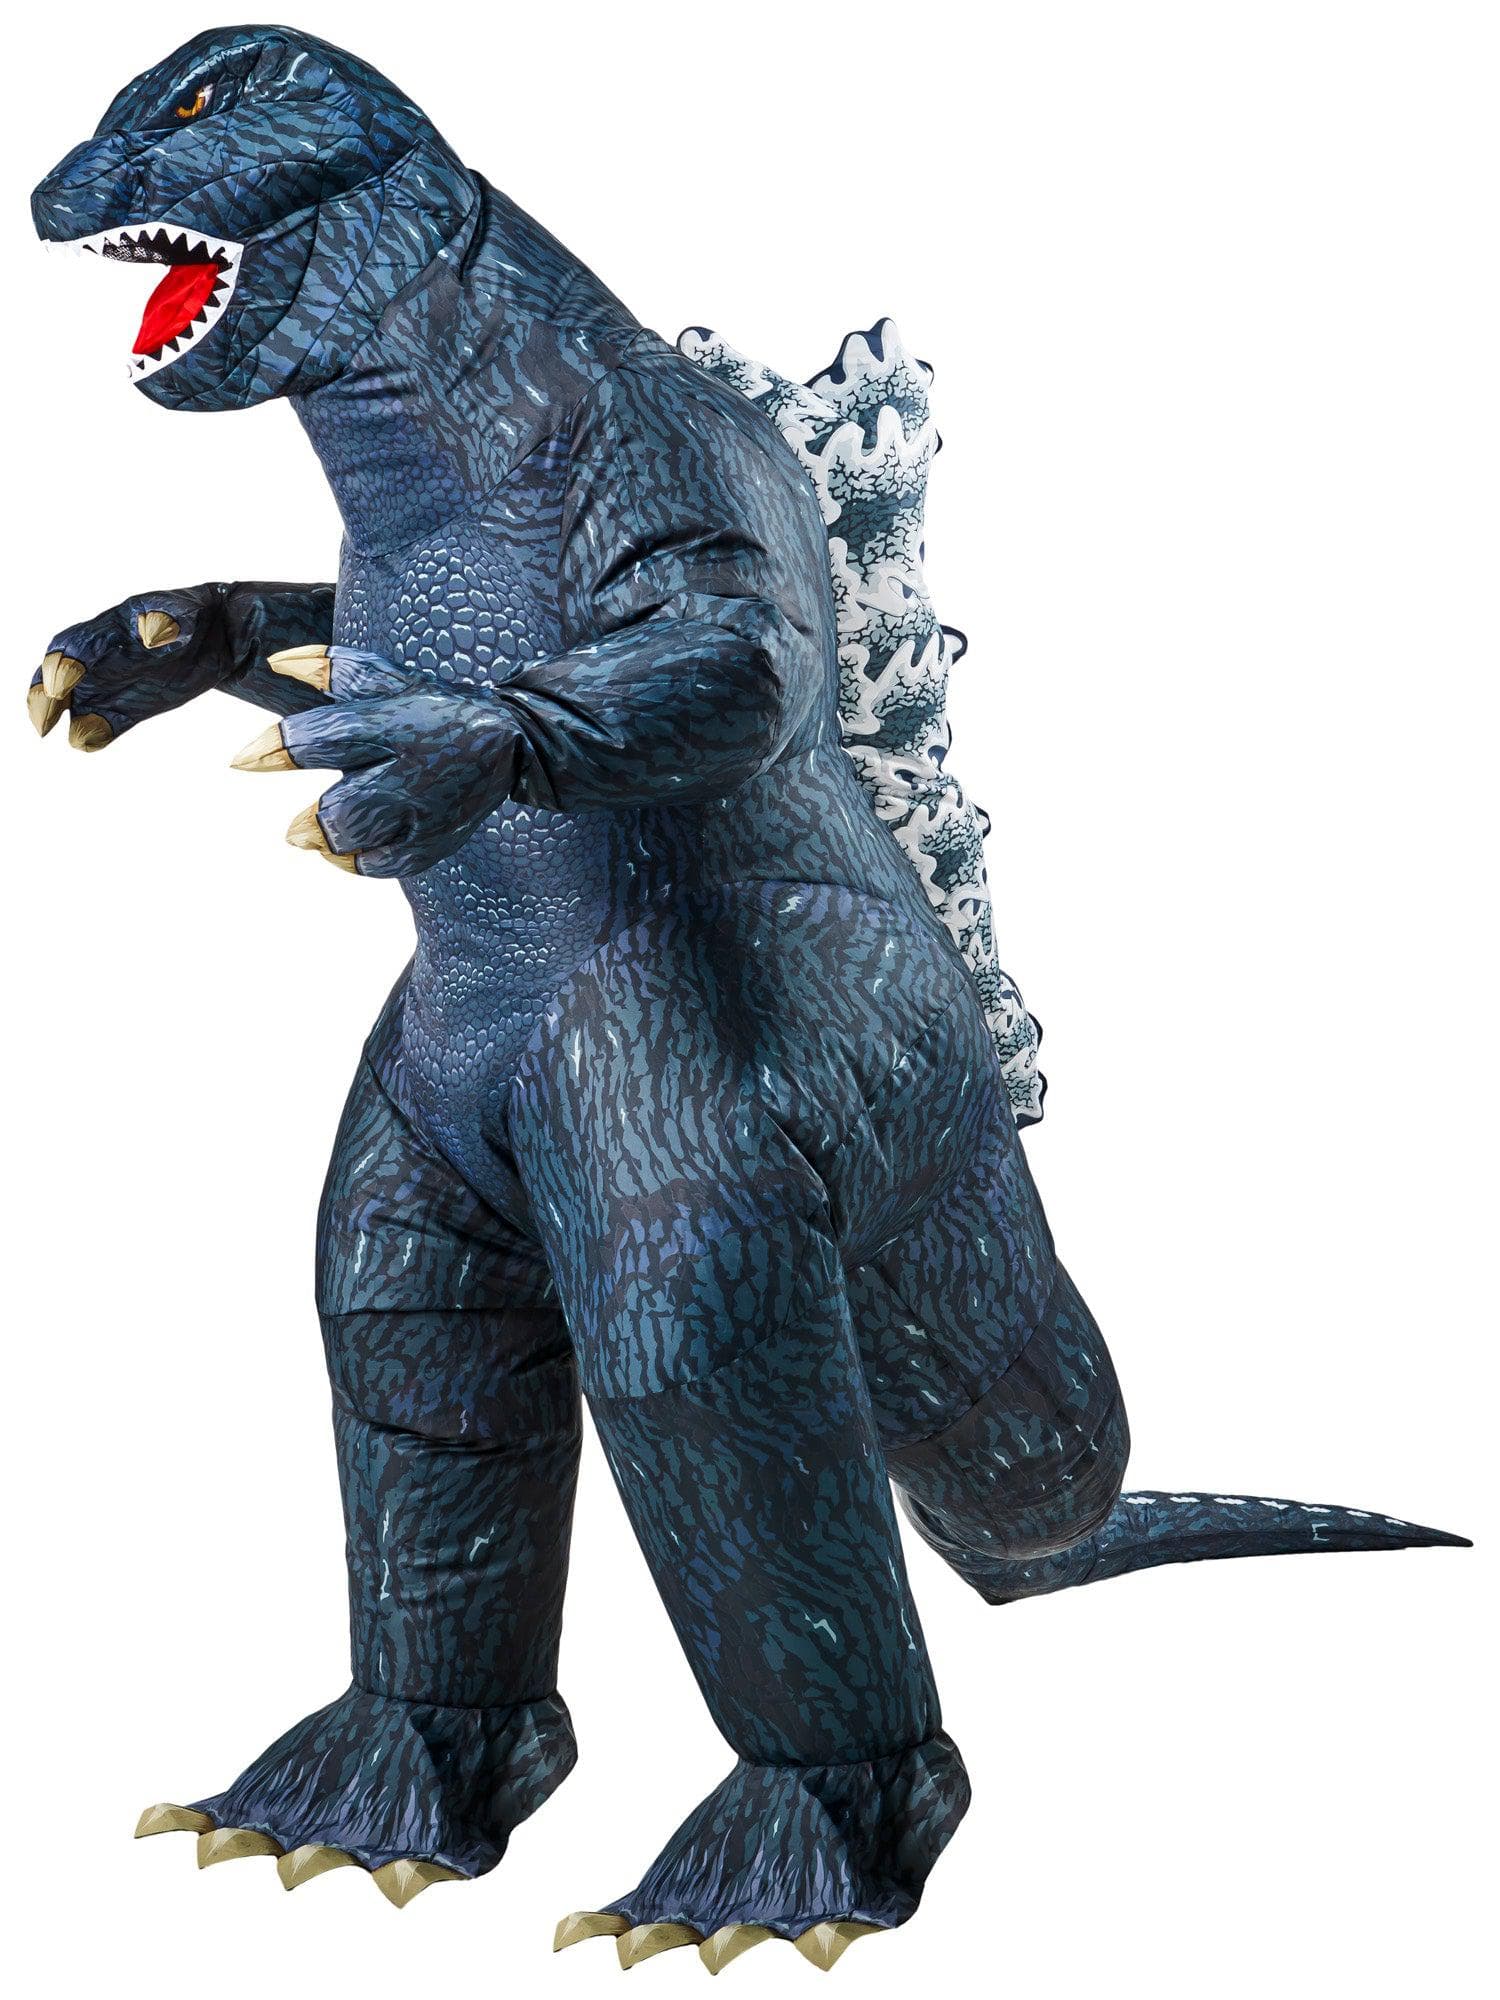 Adult Godzilla Inflatable Costume - costumes.com